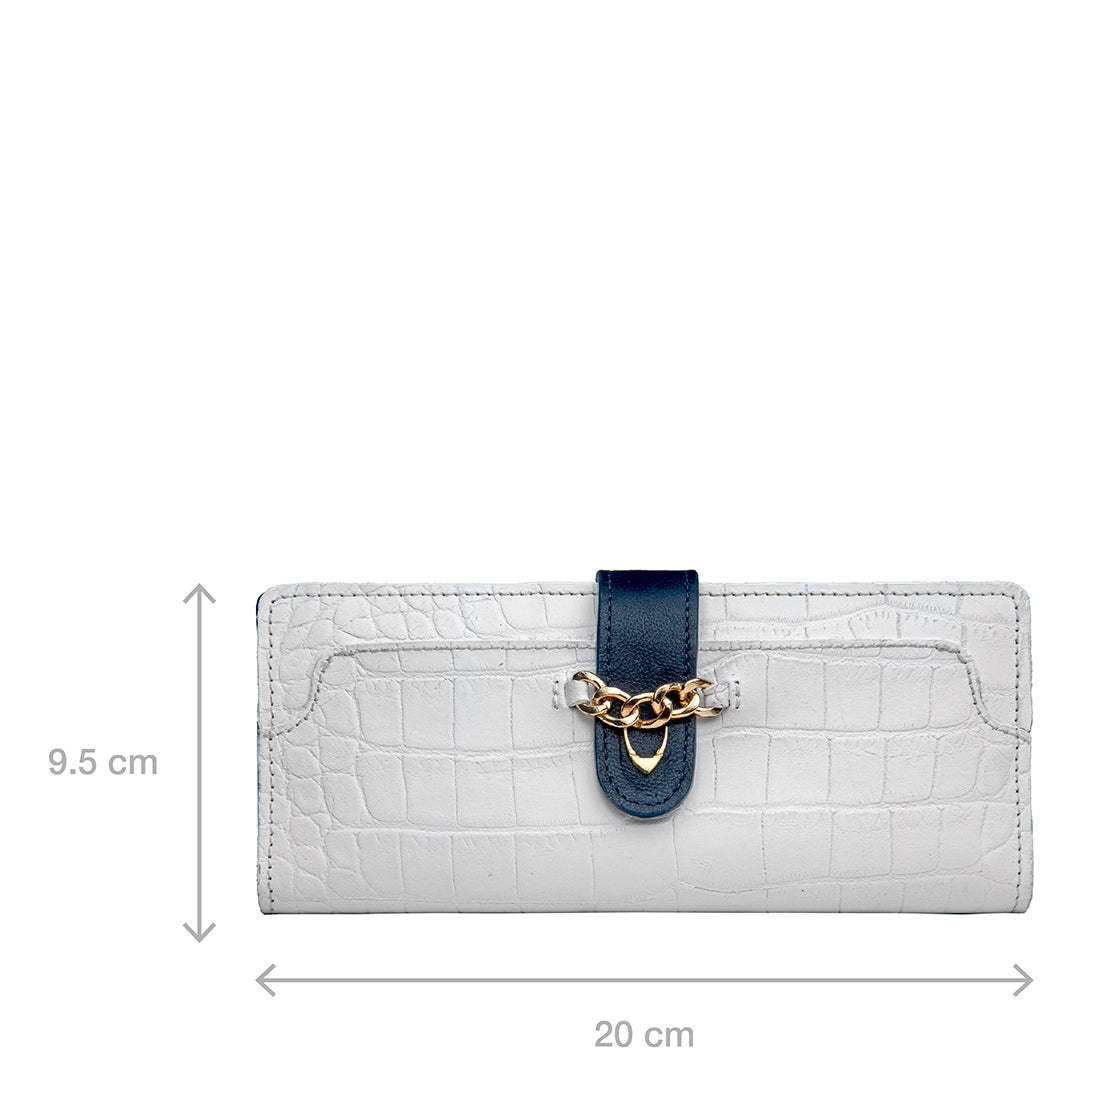 Buy Marsala Fling 01 Sling Bag Online - Hidesign